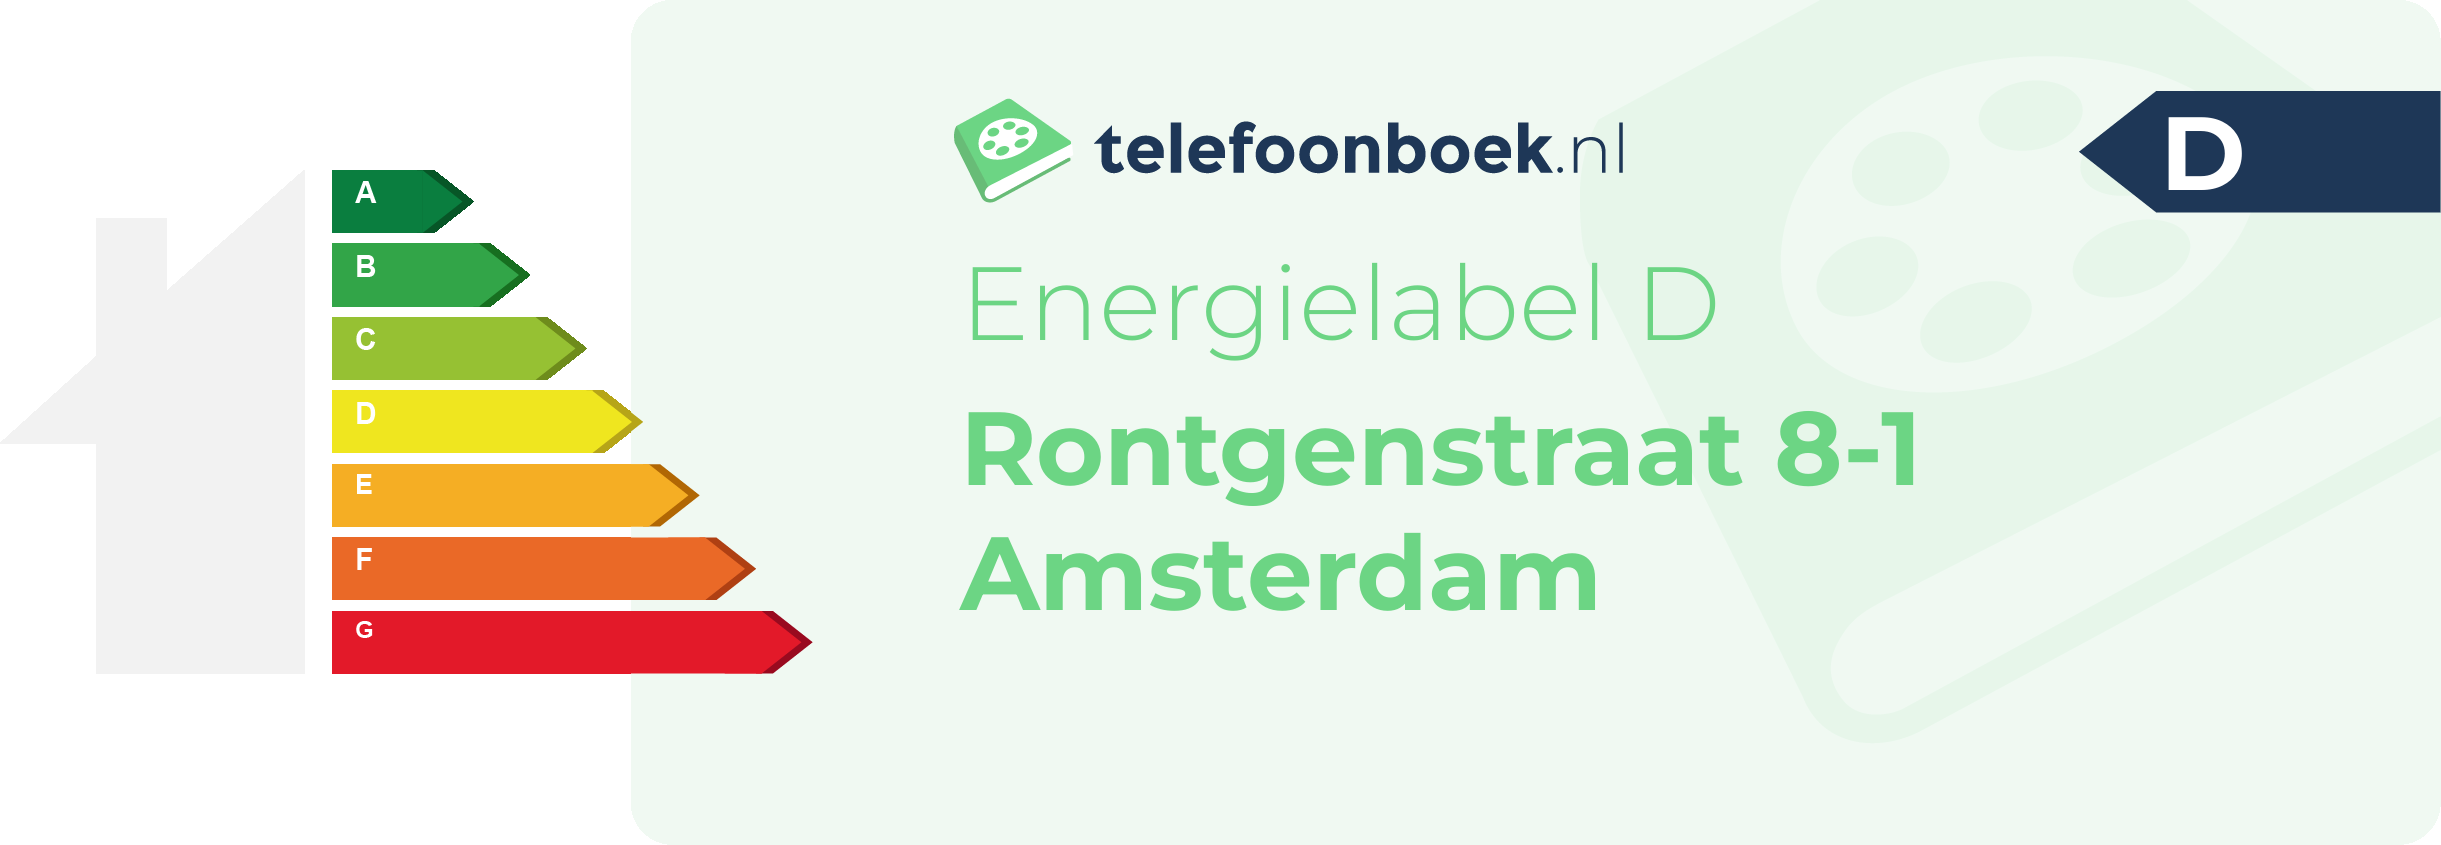 Energielabel Rontgenstraat 8-1 Amsterdam